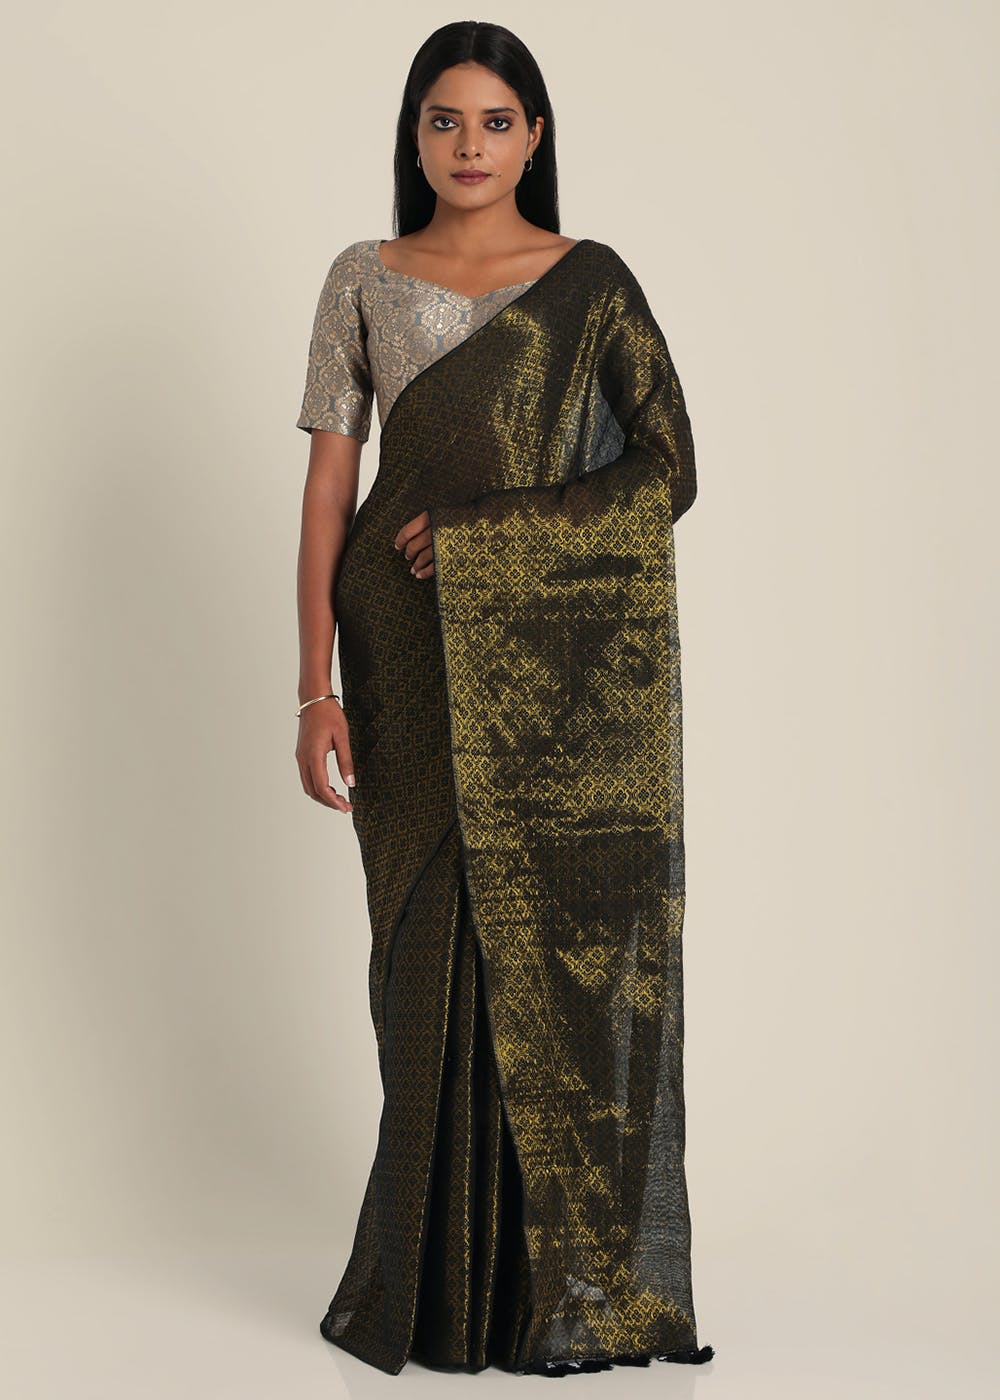 Get Black Handloom Cotton With Zari Saree at ₹ 3450 | LBB Shop